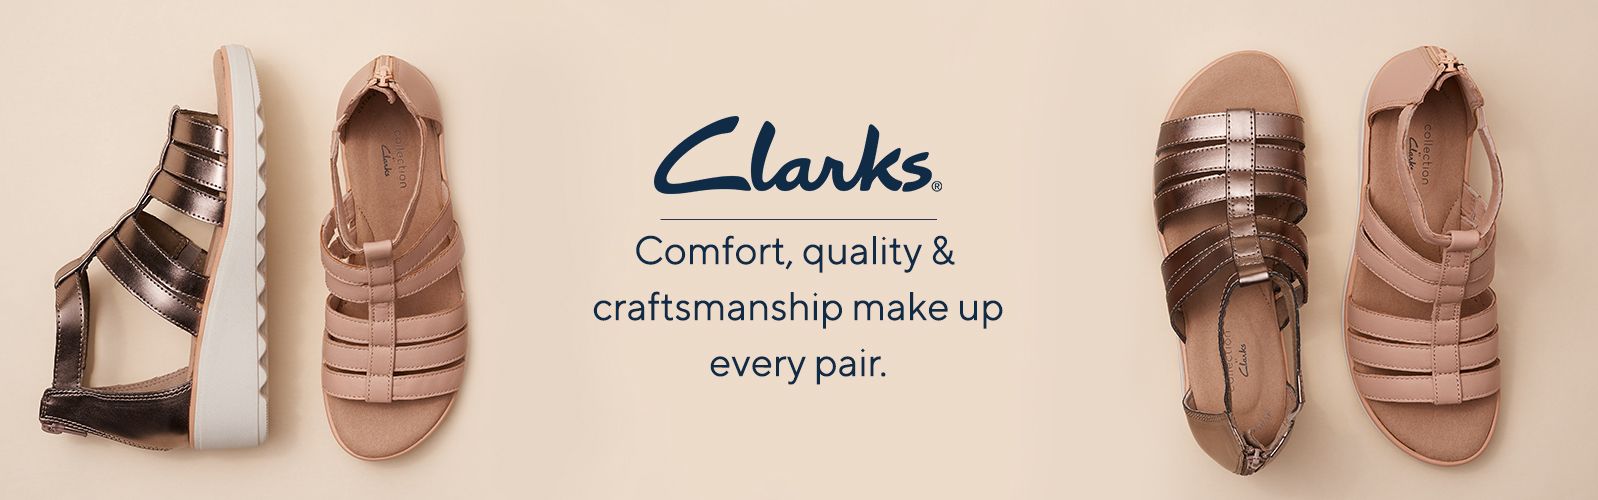 qvc clarks shoes on sale